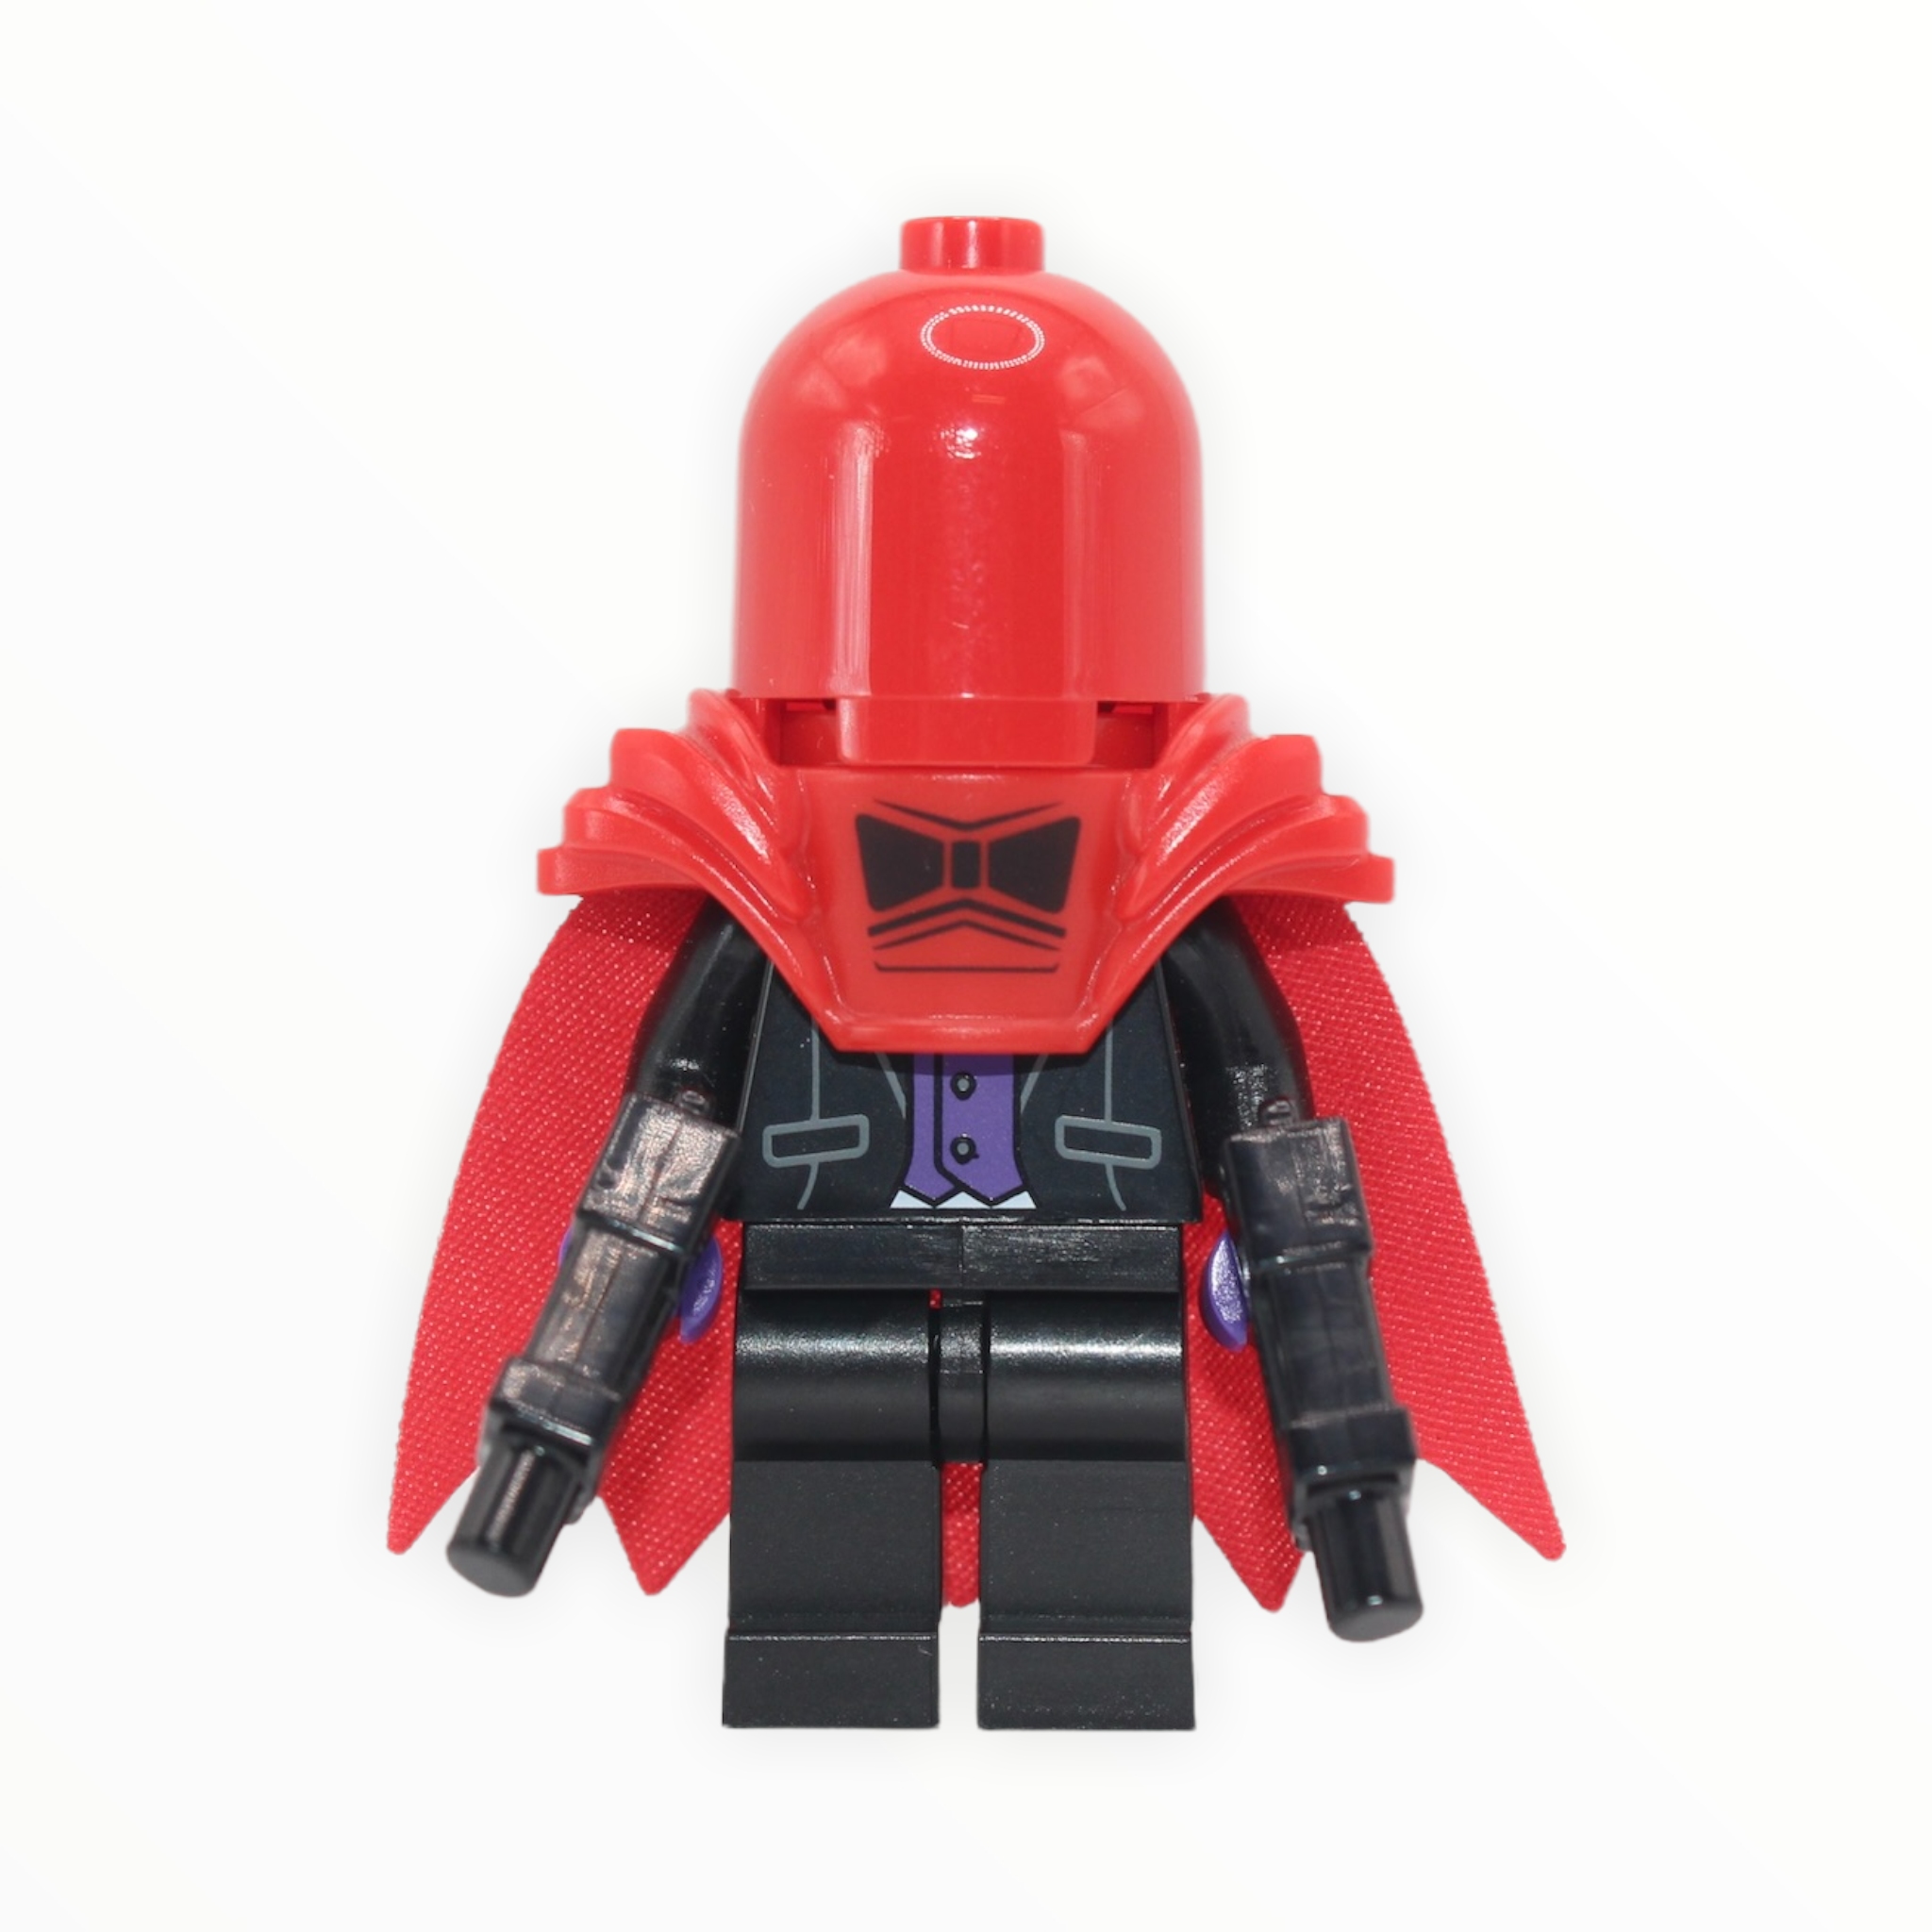 The LEGO Batman Movie Series 1: Red Hood